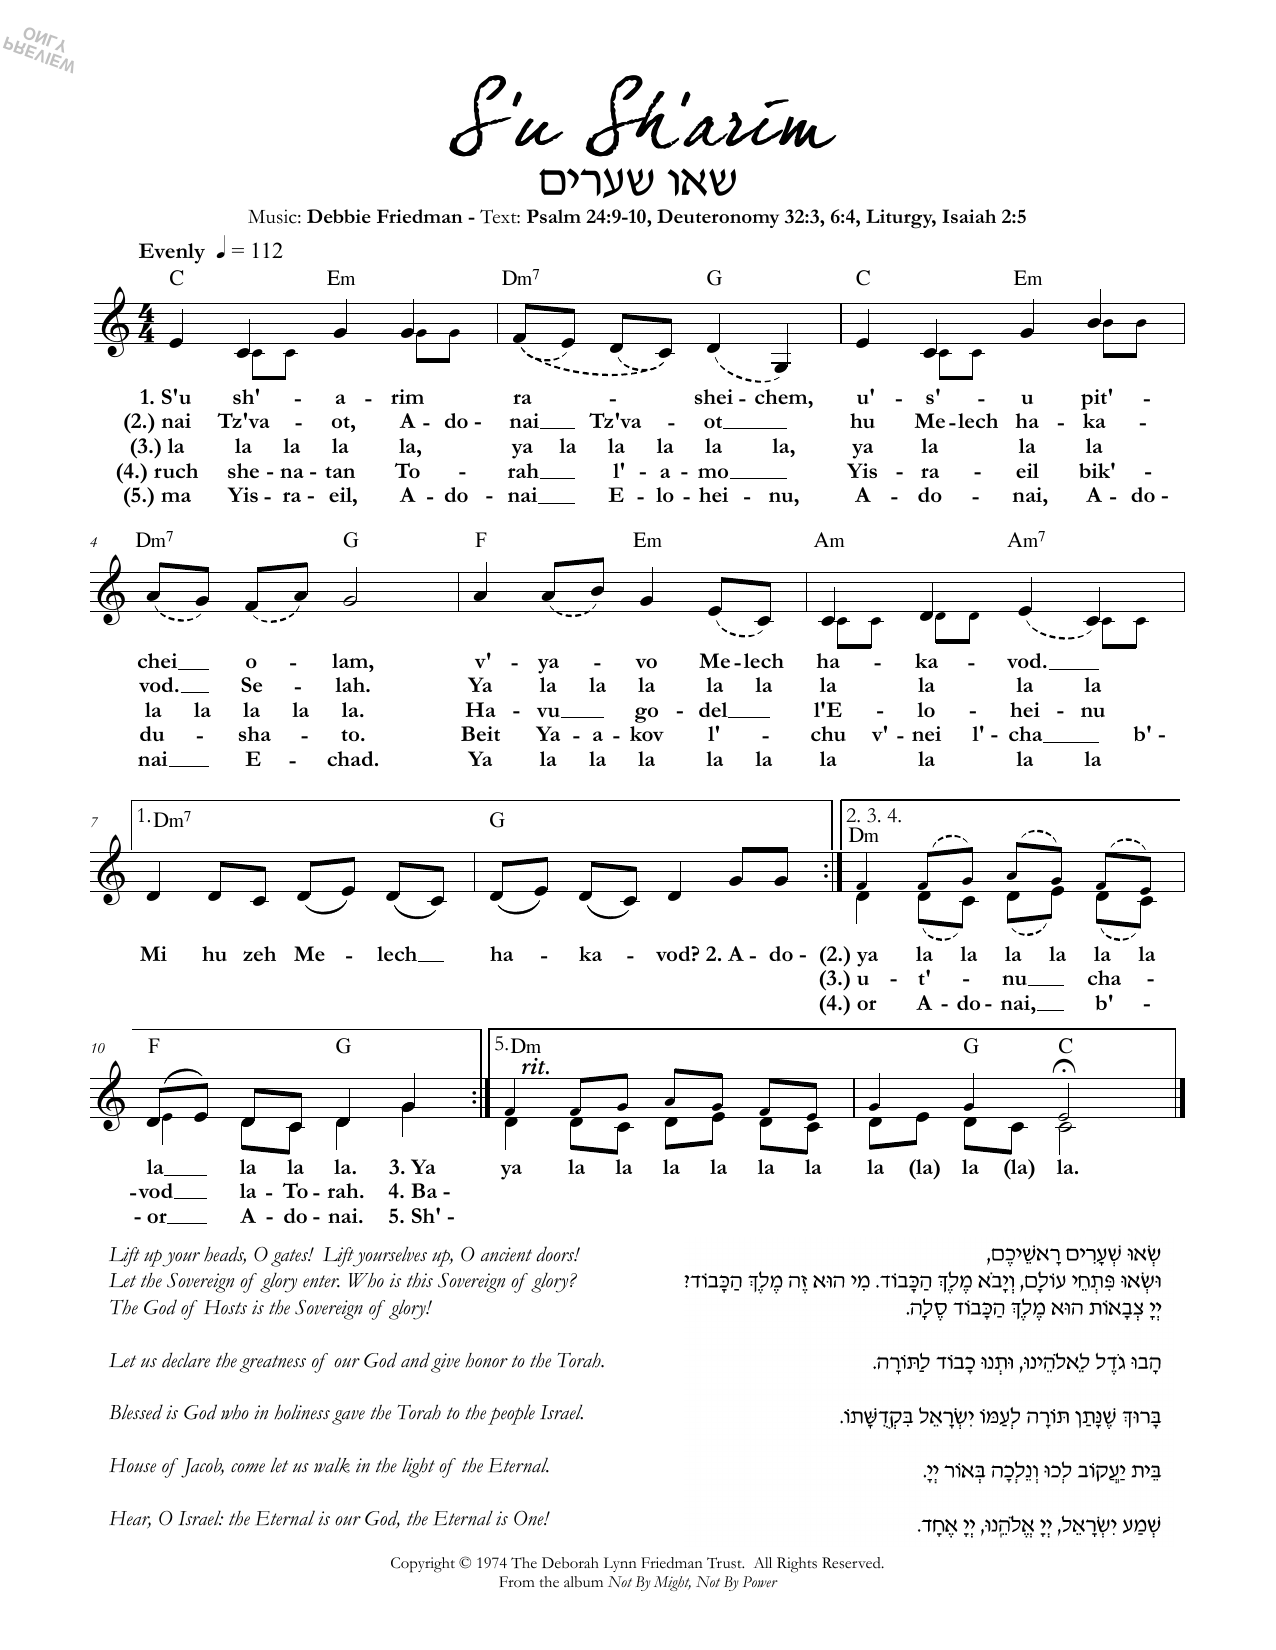 Debbie Friedman S'u Sh'arim Sheet Music Notes & Chords for Lead Sheet / Fake Book - Download or Print PDF